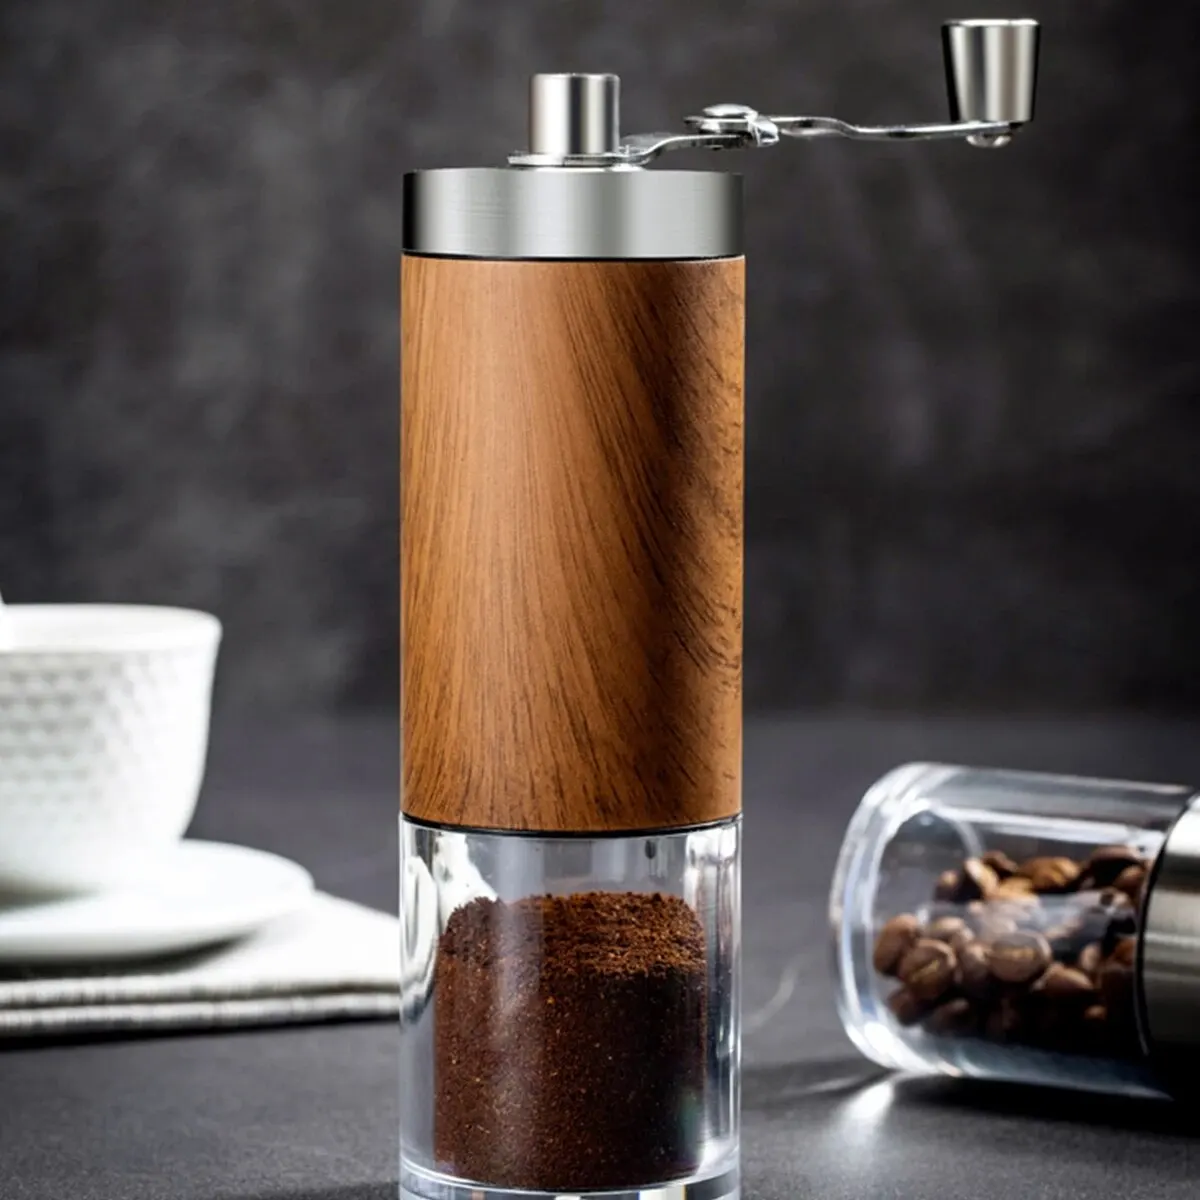 https://ae01.alicdn.com/kf/S71fc7808cffb497490409430c93885137/Coffee-Bean-Grinder-Portable-Wood-Grain-Stainless-Steel-Crank-Hand-Hand-Coffee-Grinder-Kitchen-Tool-Grinder.jpg